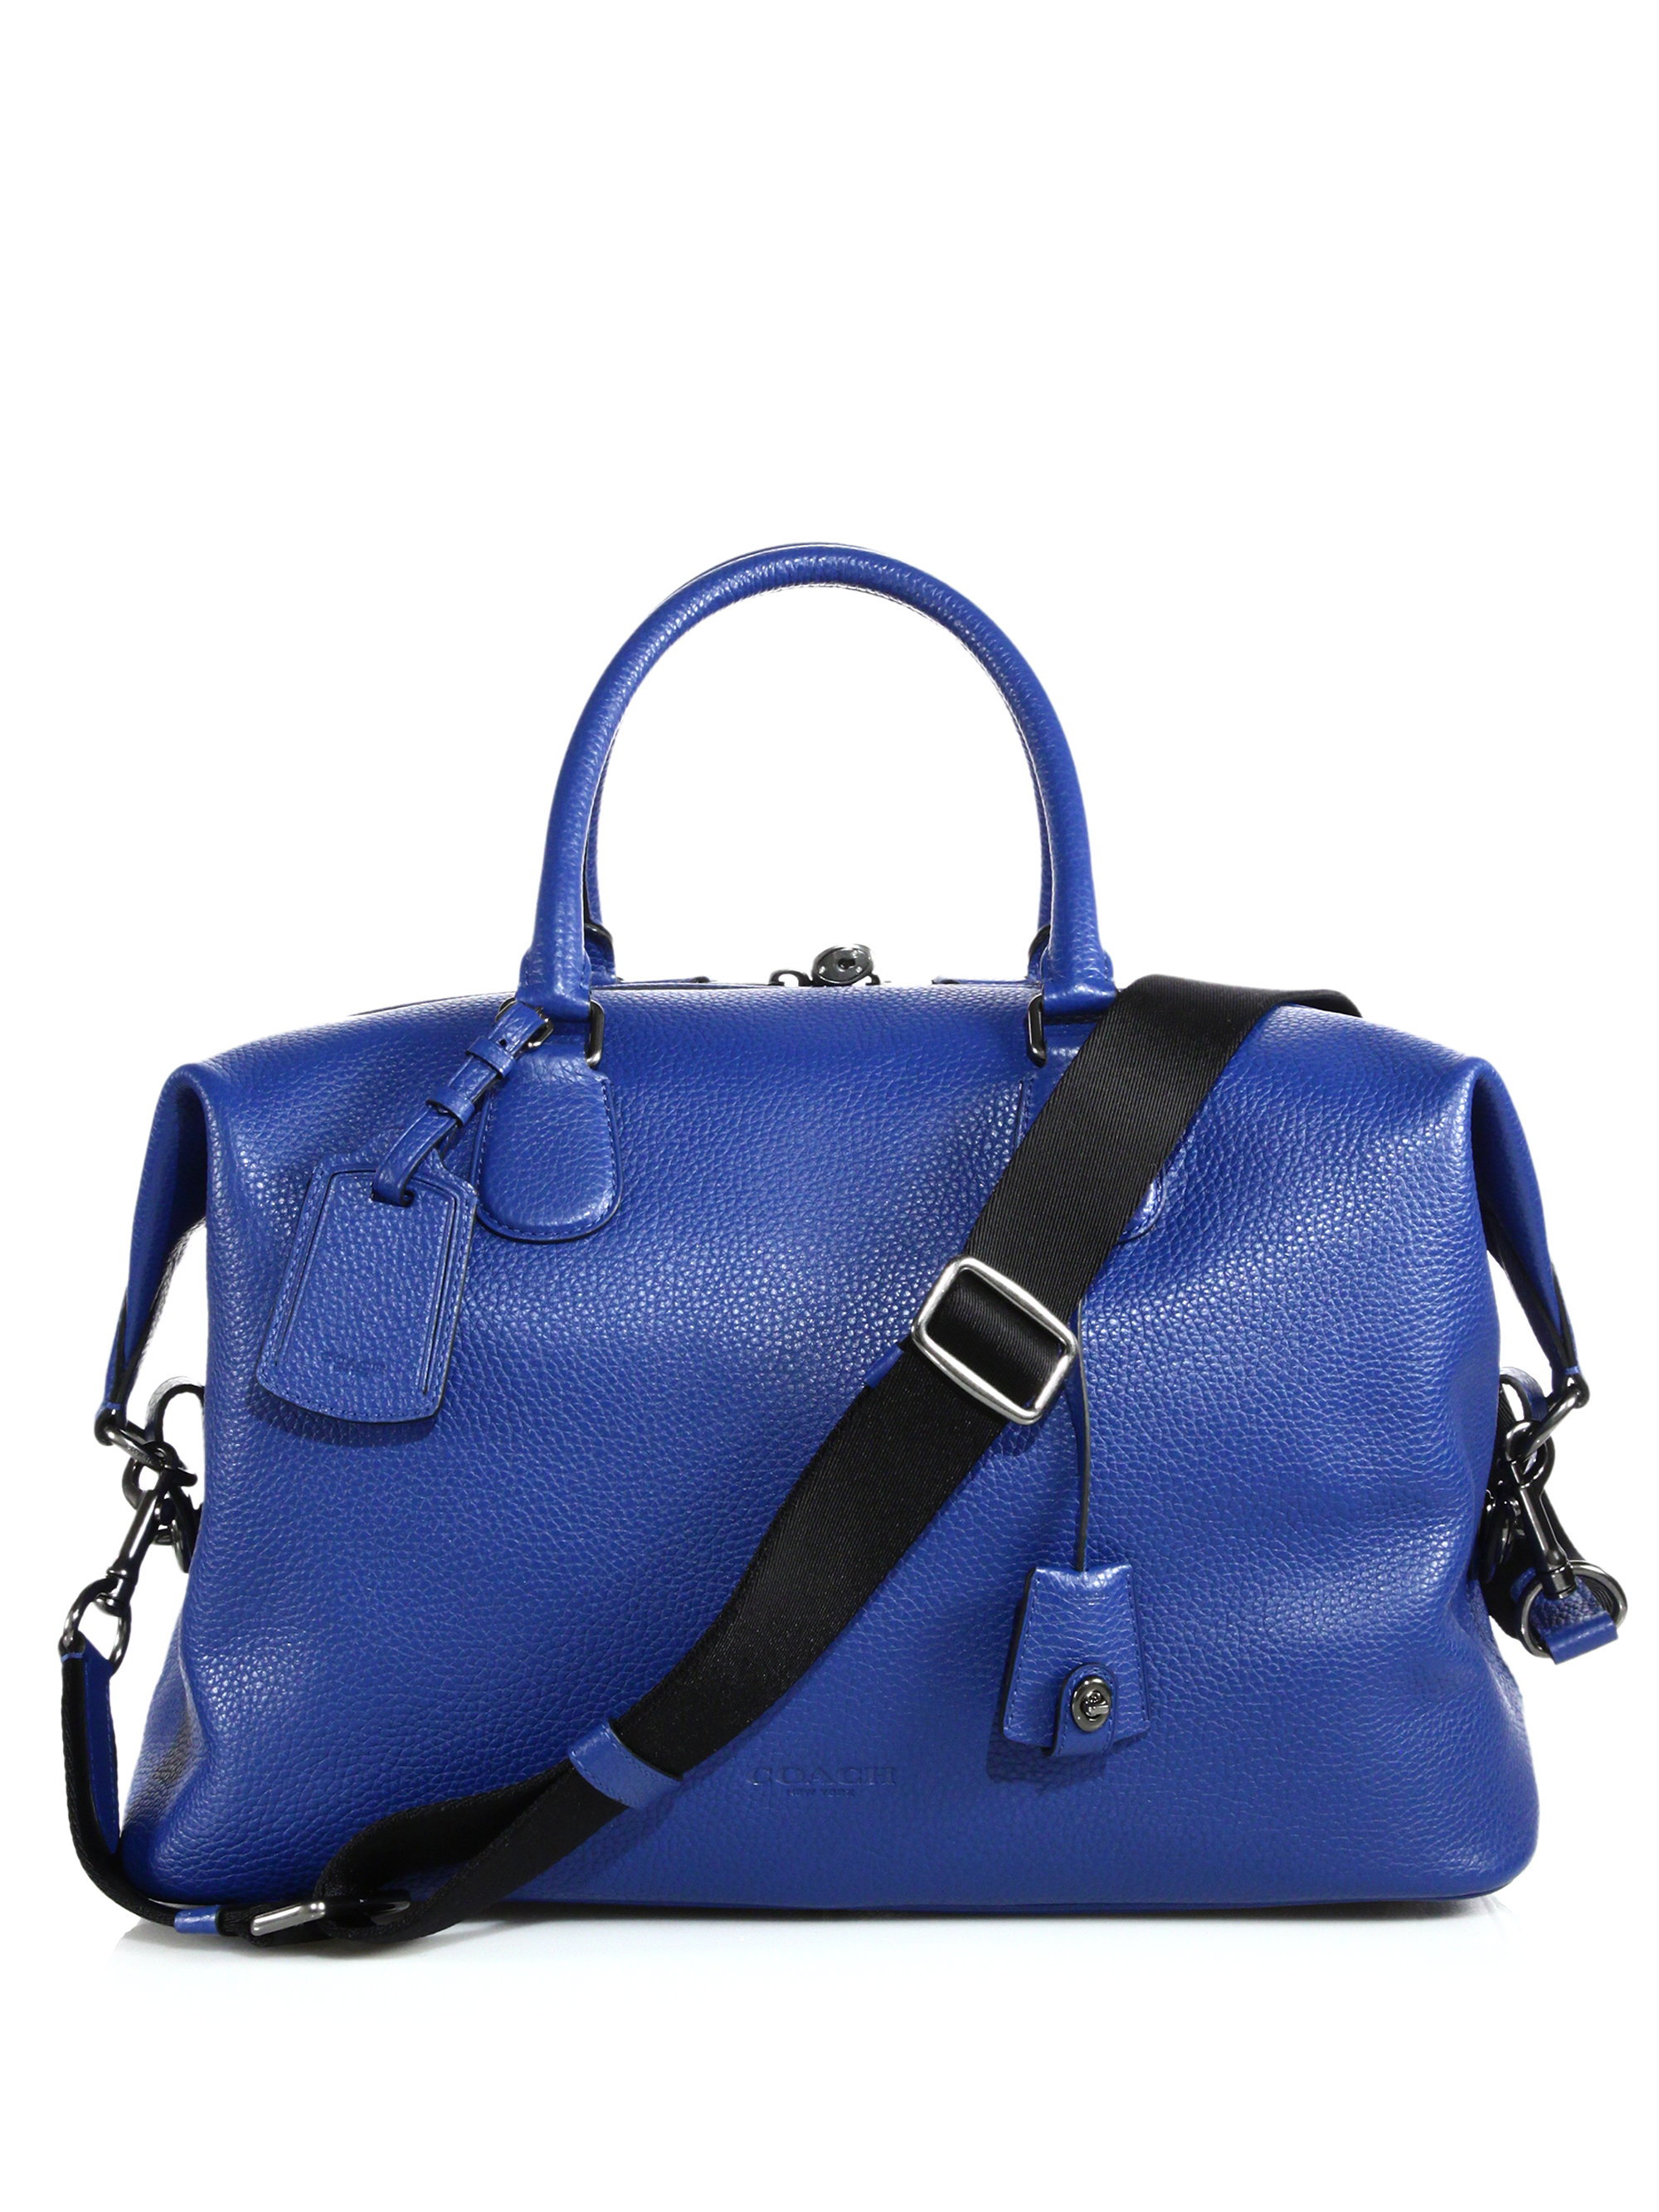 COACH Explorer Leather Duffel Bag in Blue for Men - Lyst